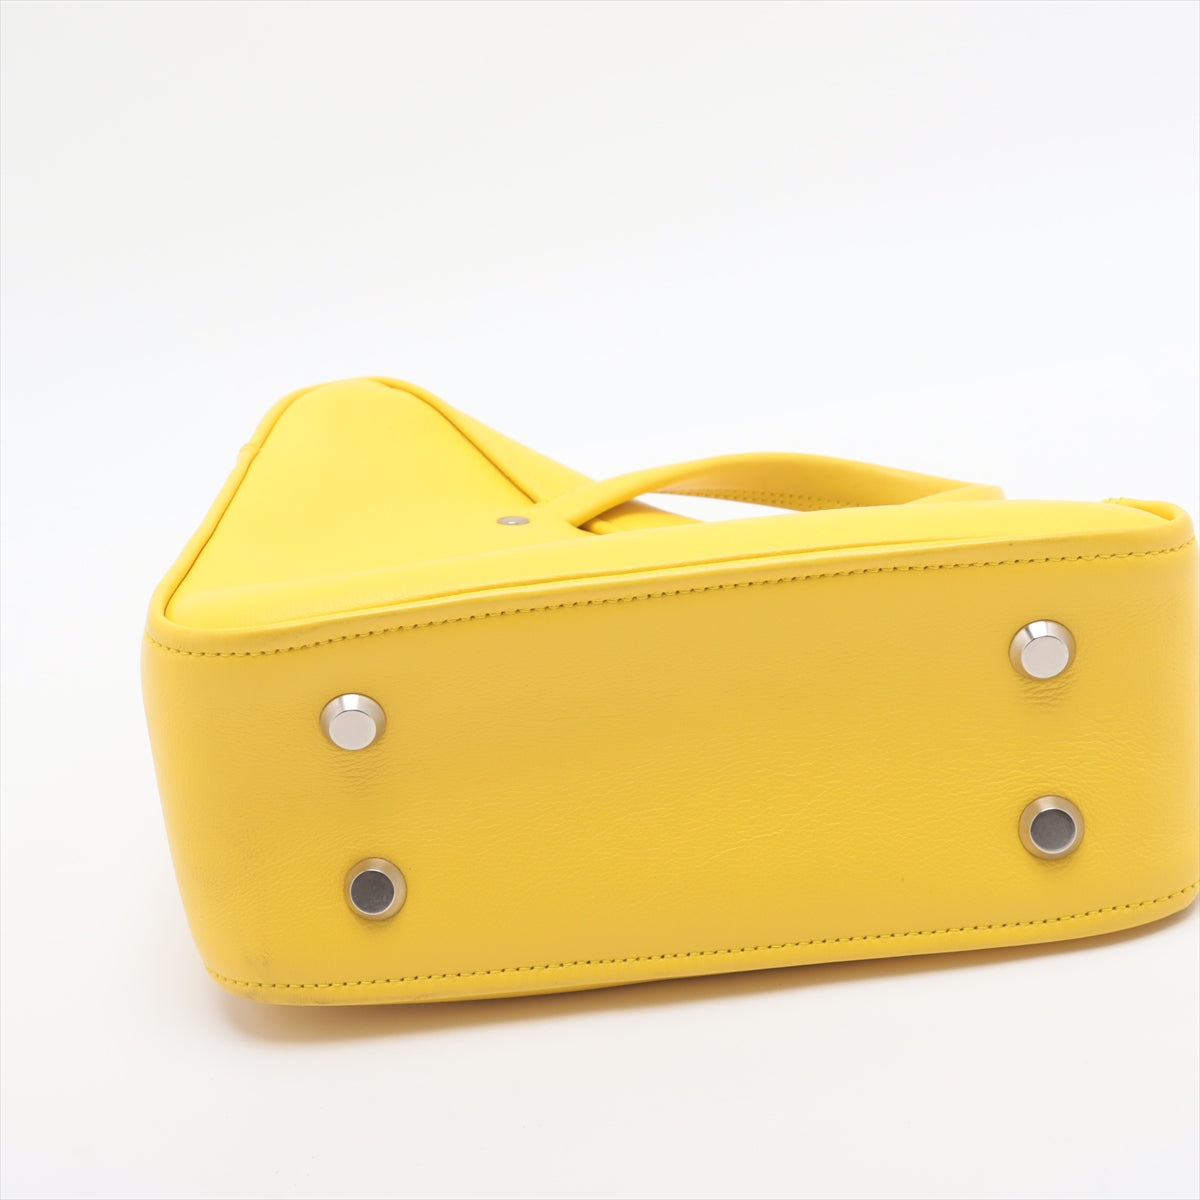 Balenciaga Triangle Duffel Leather 2way handbag Yellow 476975